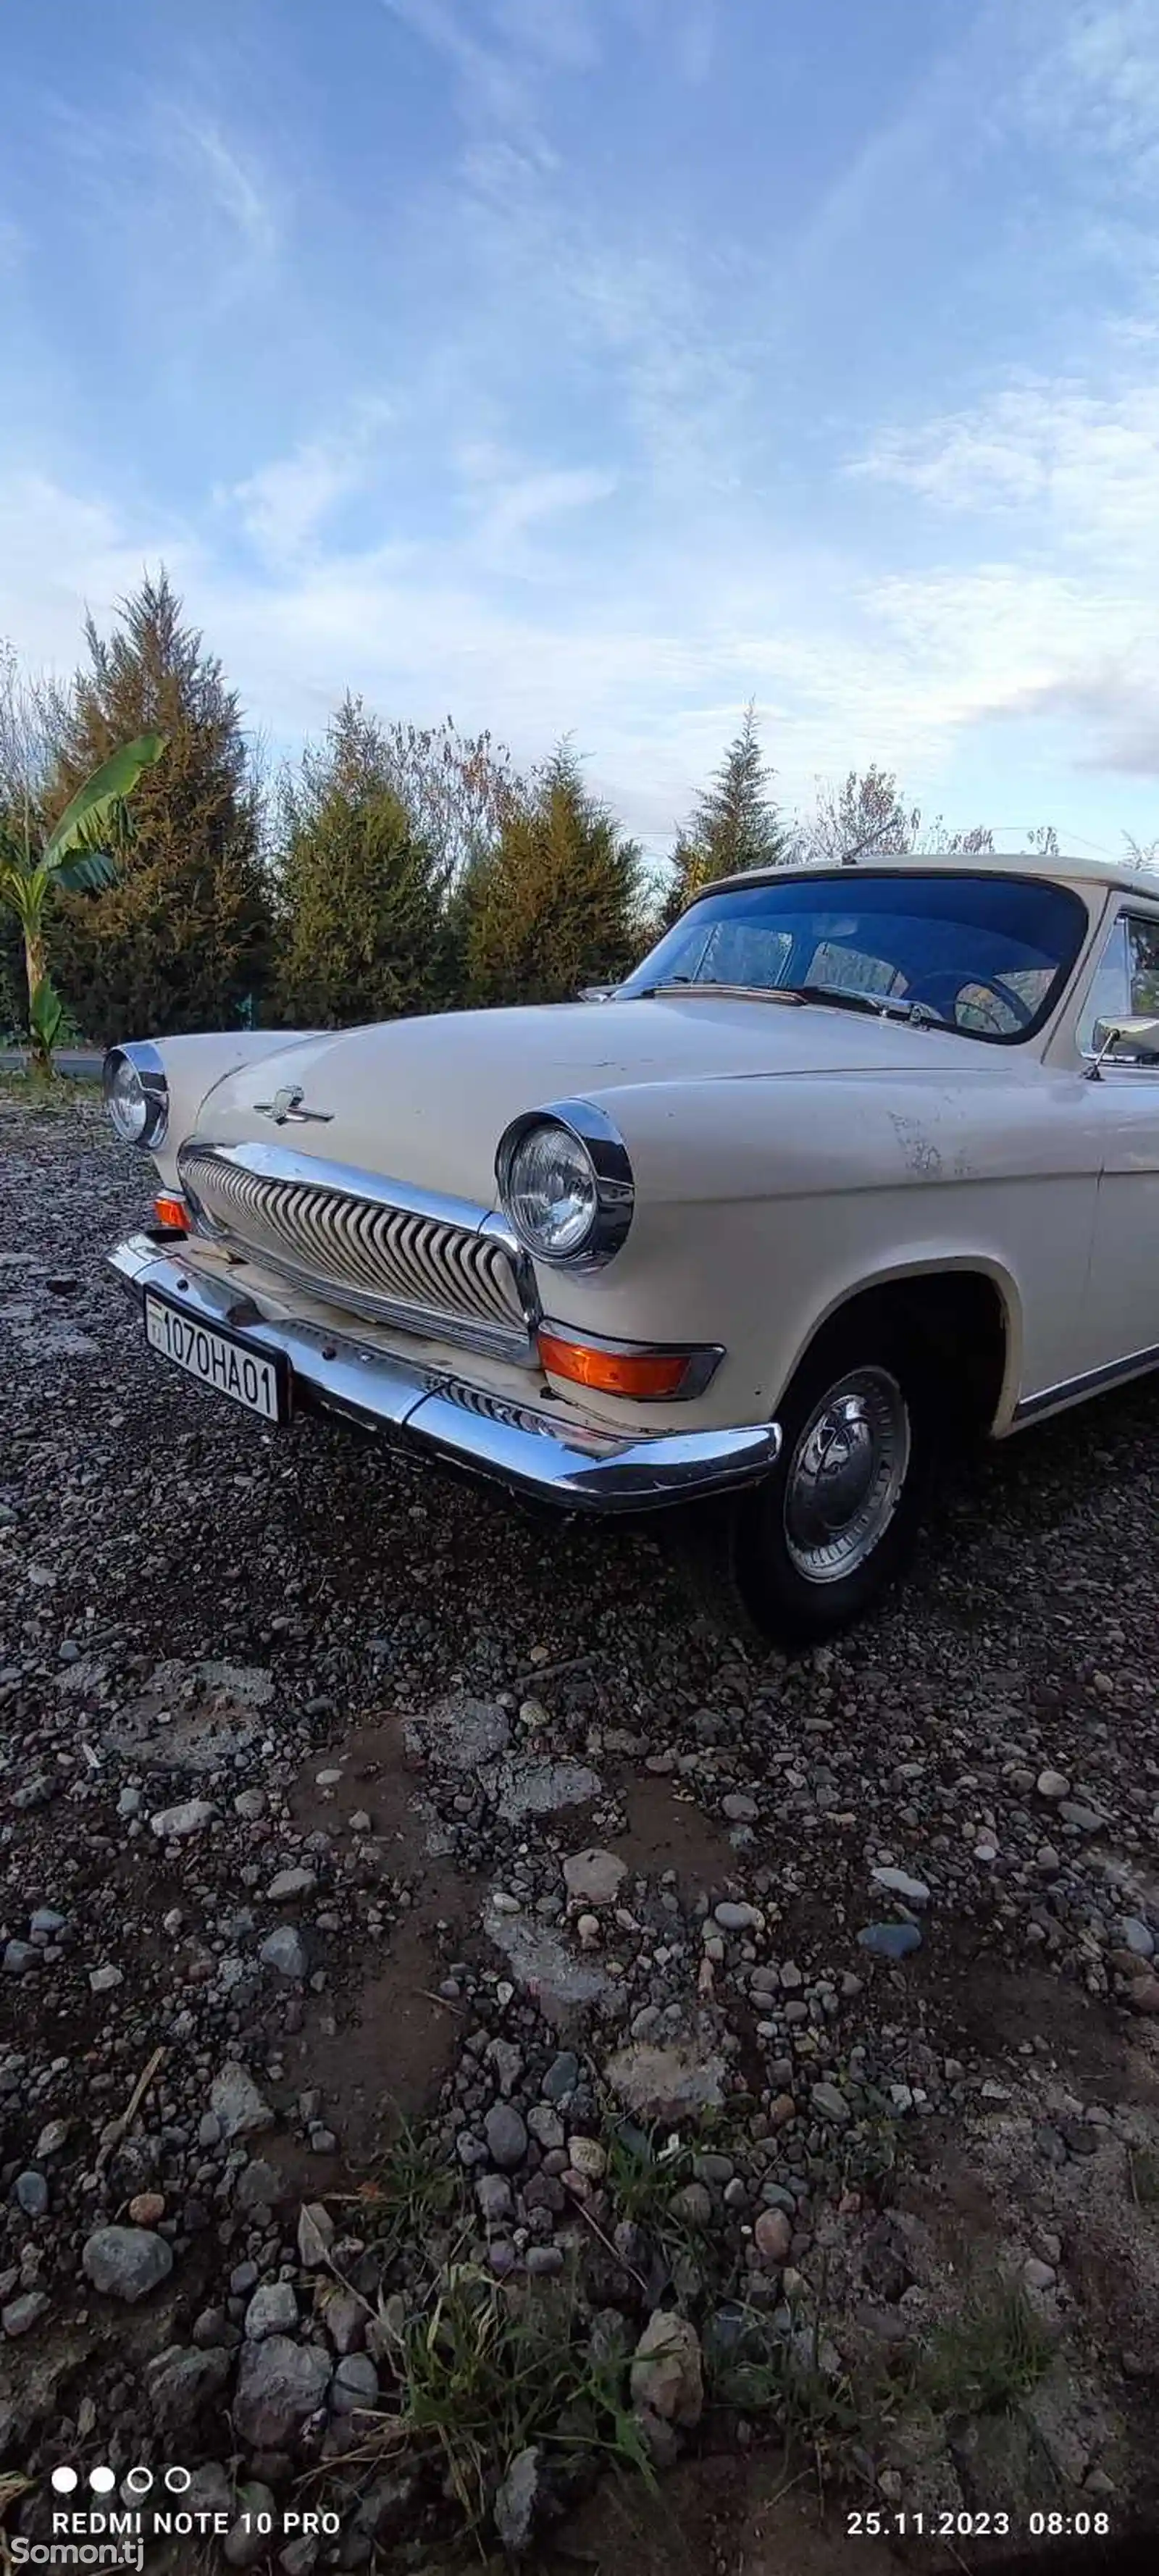 ГАЗ 21, 1960-9